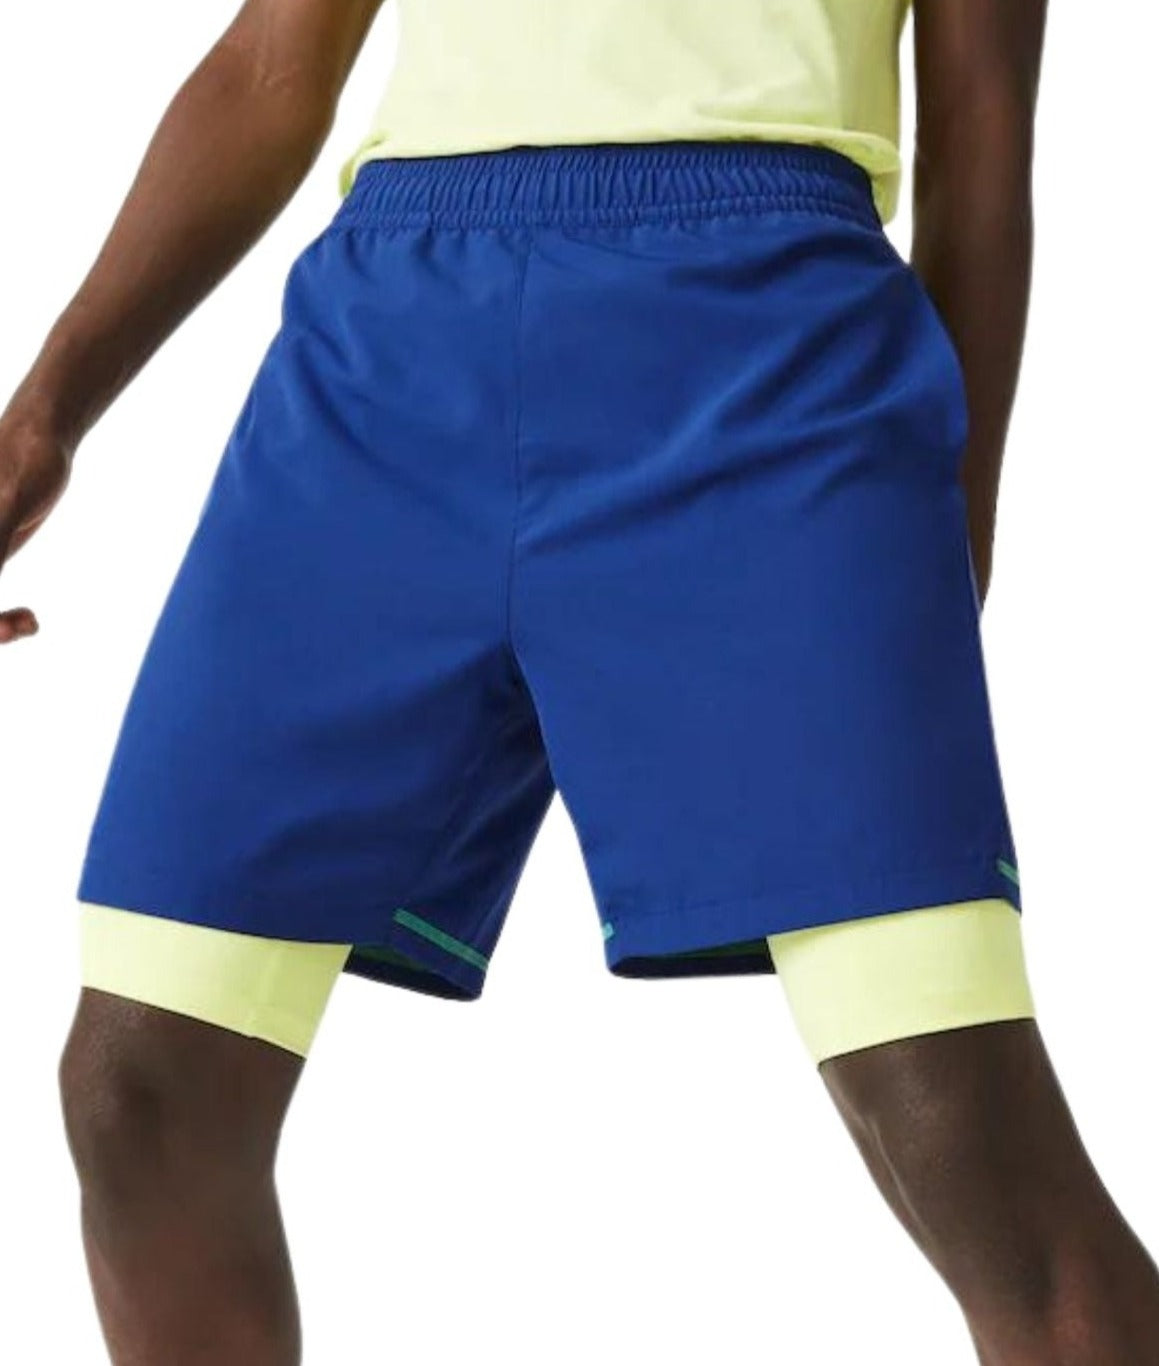 GH10418Q6 Pantalon corto lacoste gh1041 - shorts - Medina Menswear®